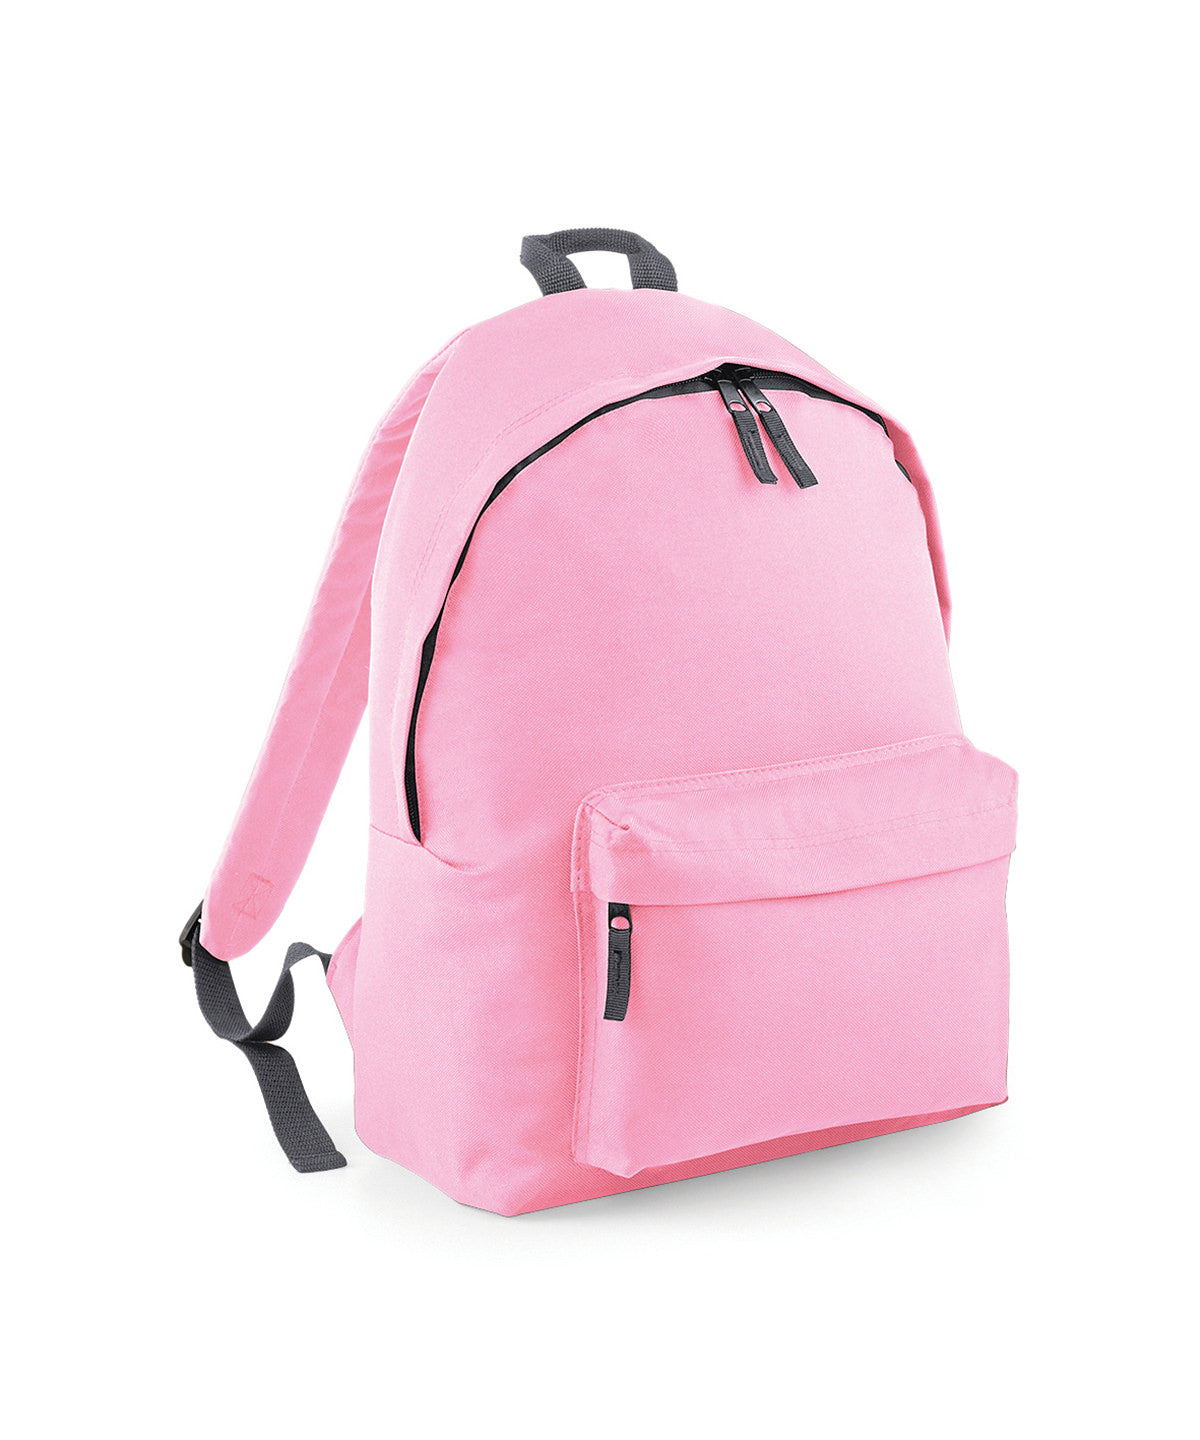 Töskur - Original Fashion Backpack